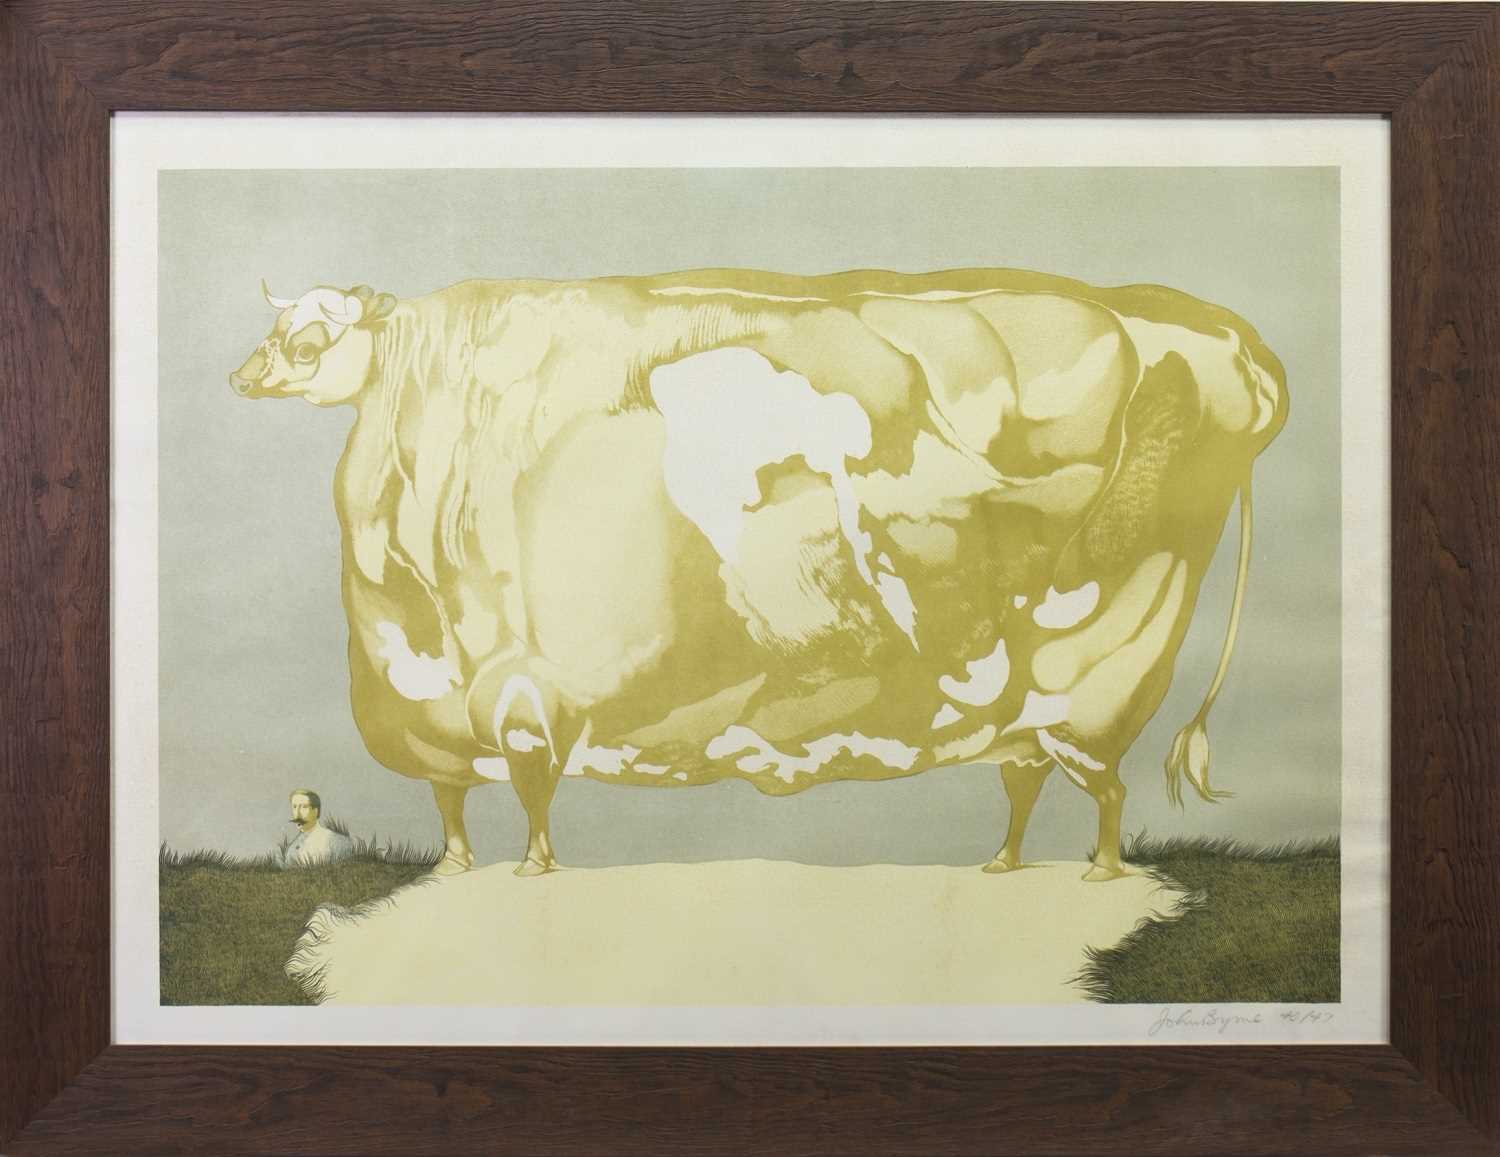 Lot 507 - PRIZE COW, A LITHOGRAPH BY JOHN BYRNE